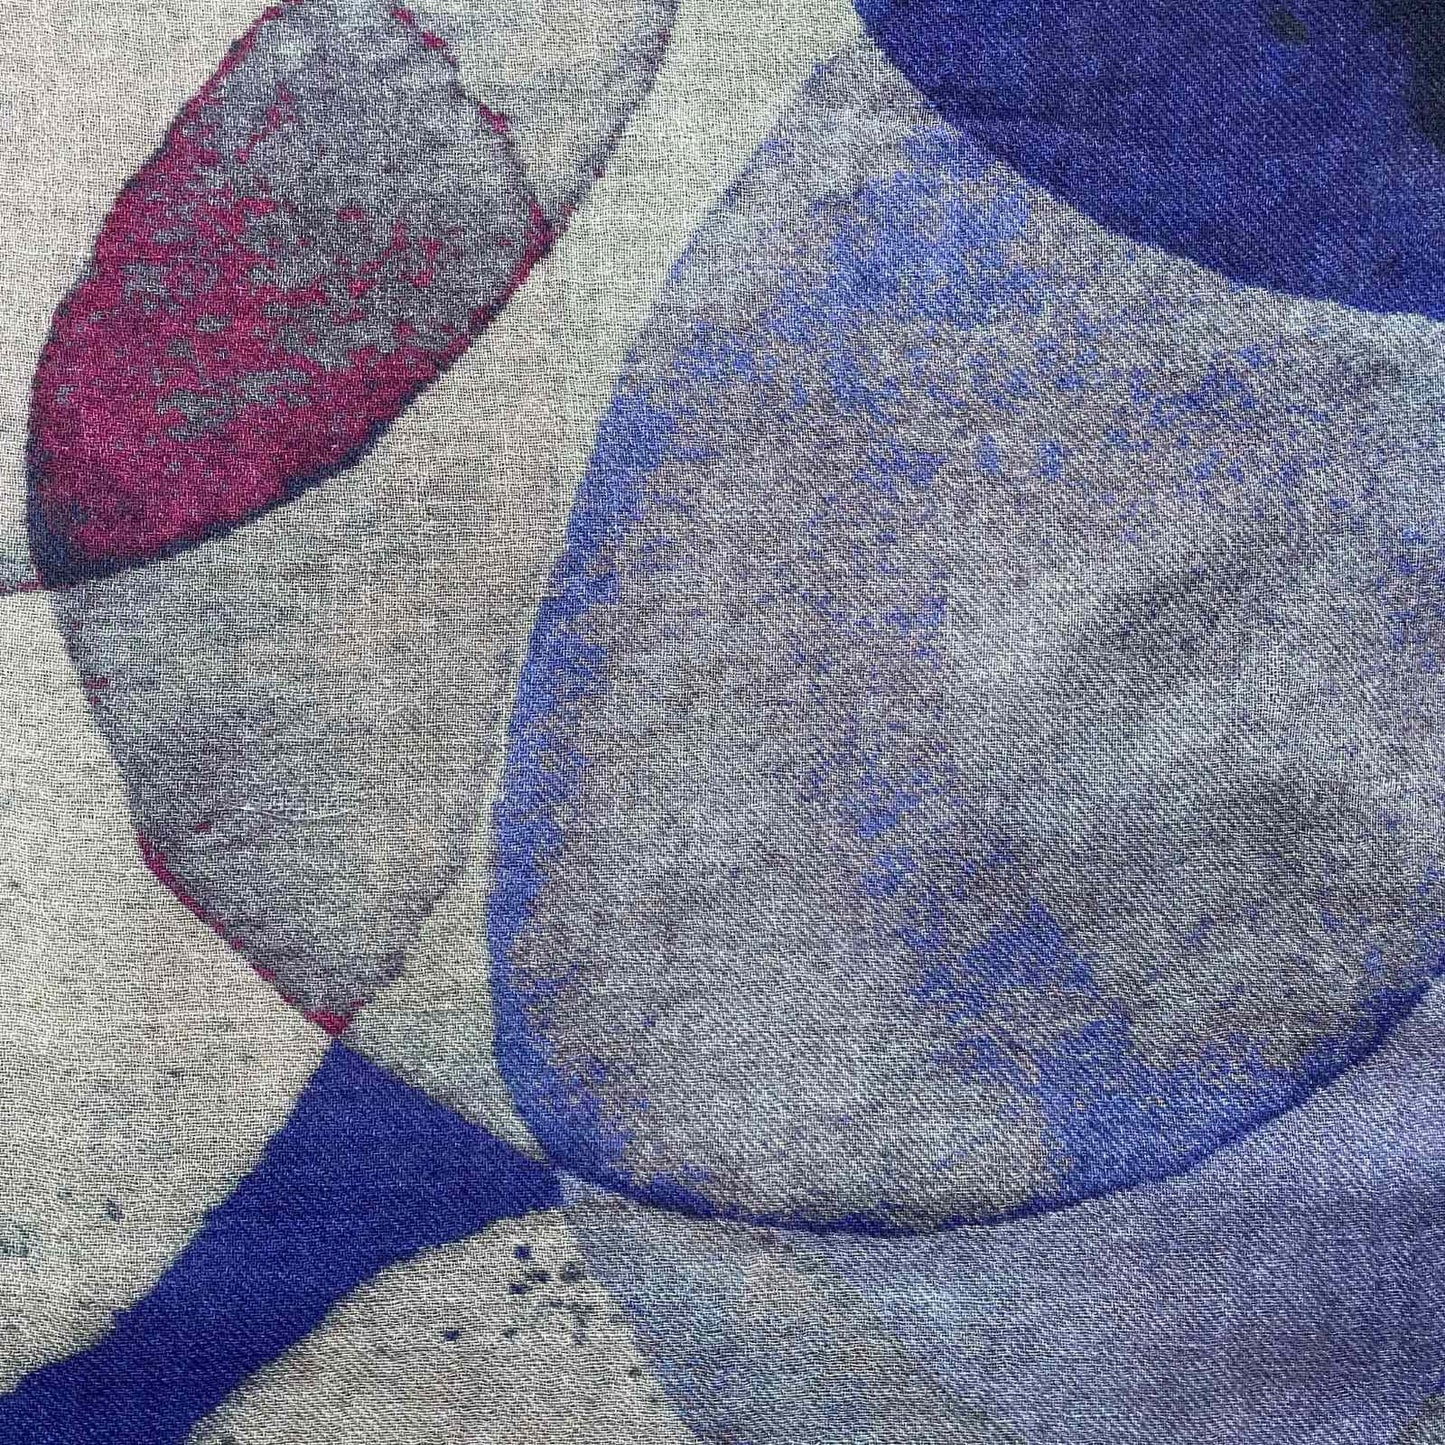 mønster på blåt tørklæde med lilla pletter